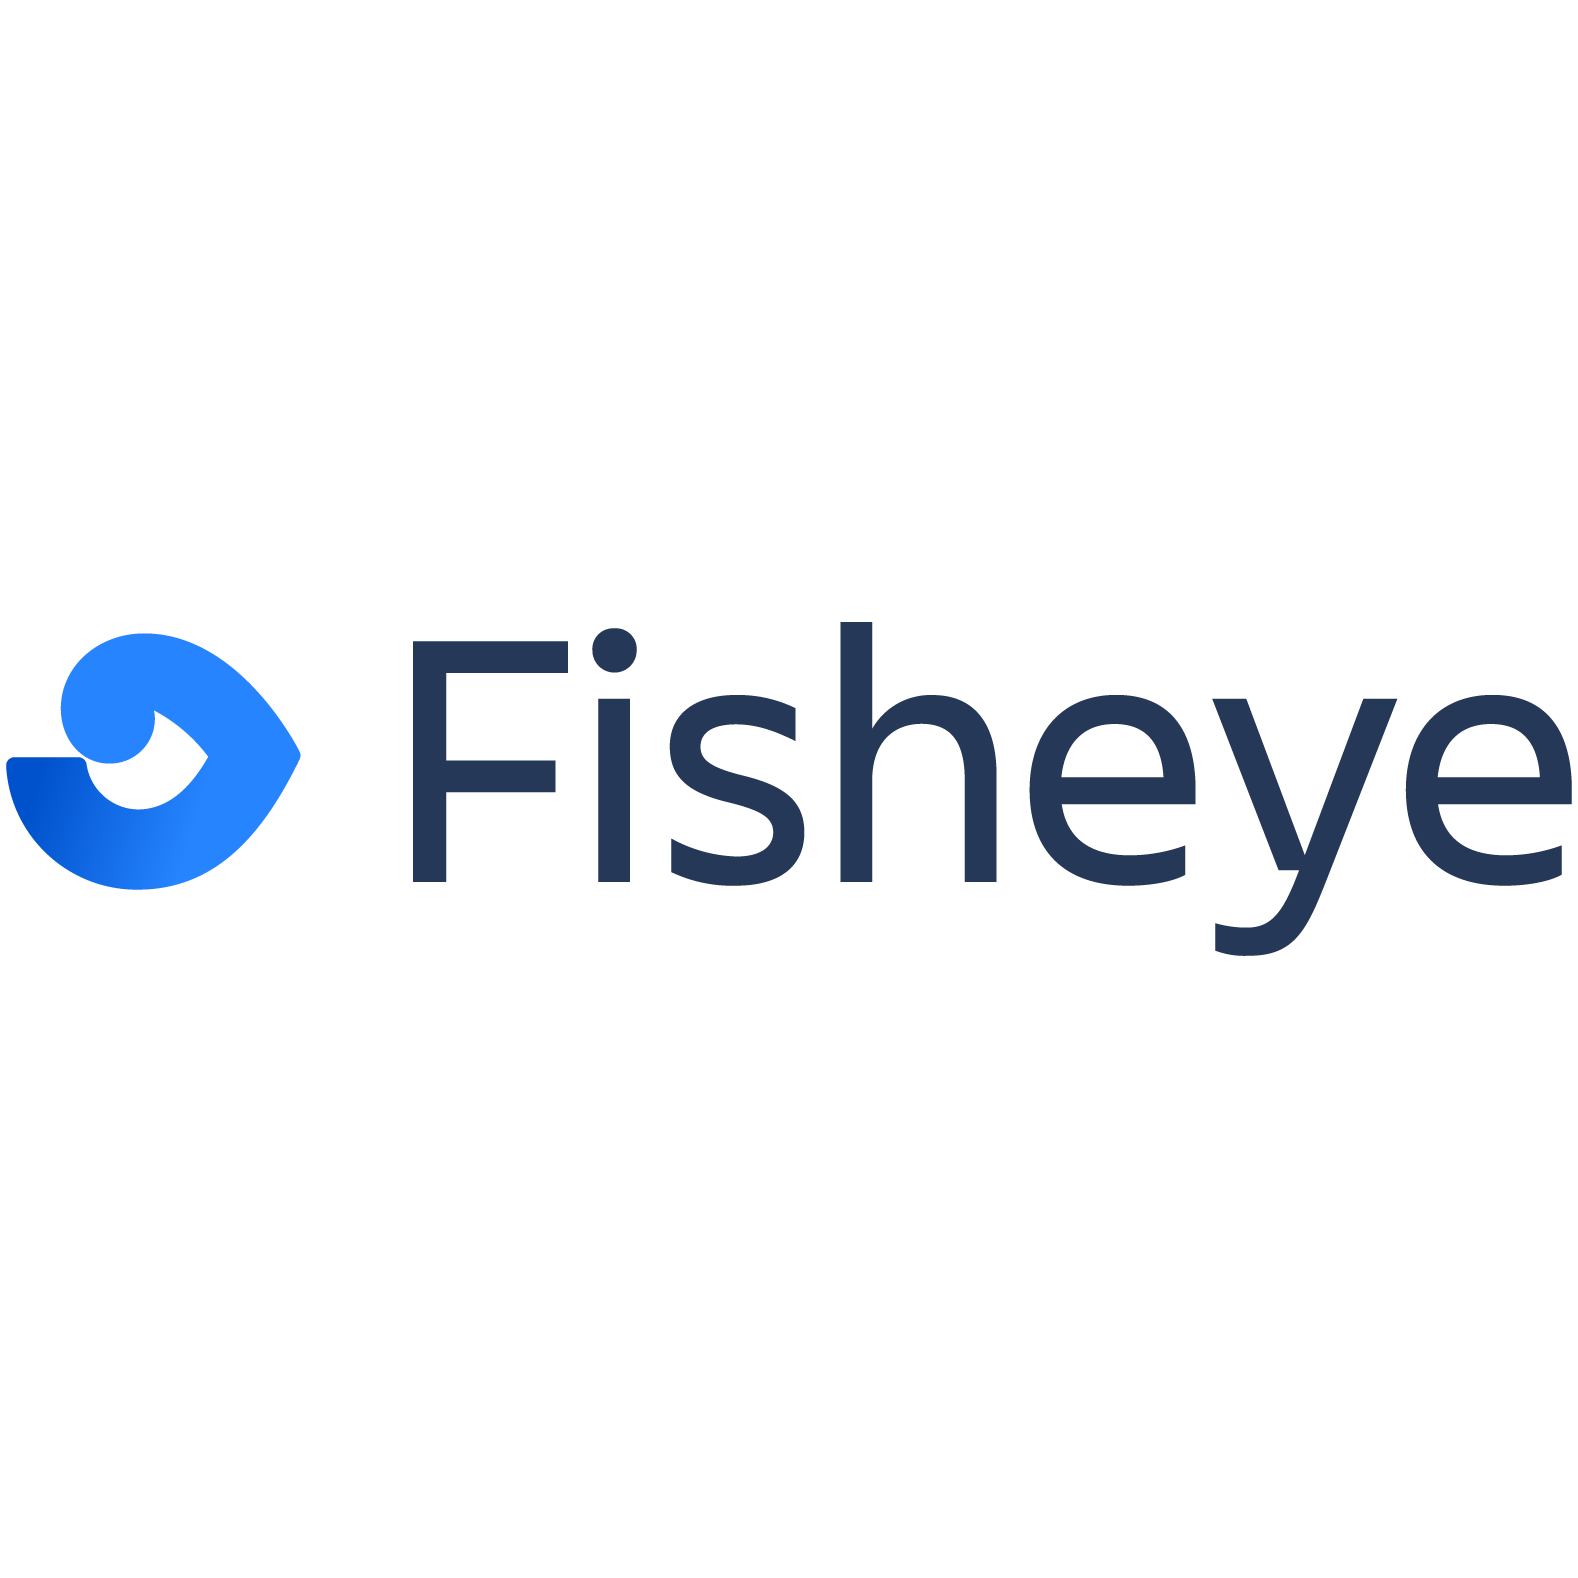 Fisheye – Einsicht ins Source Code Repository mit dem Atlassian Tool for Devs